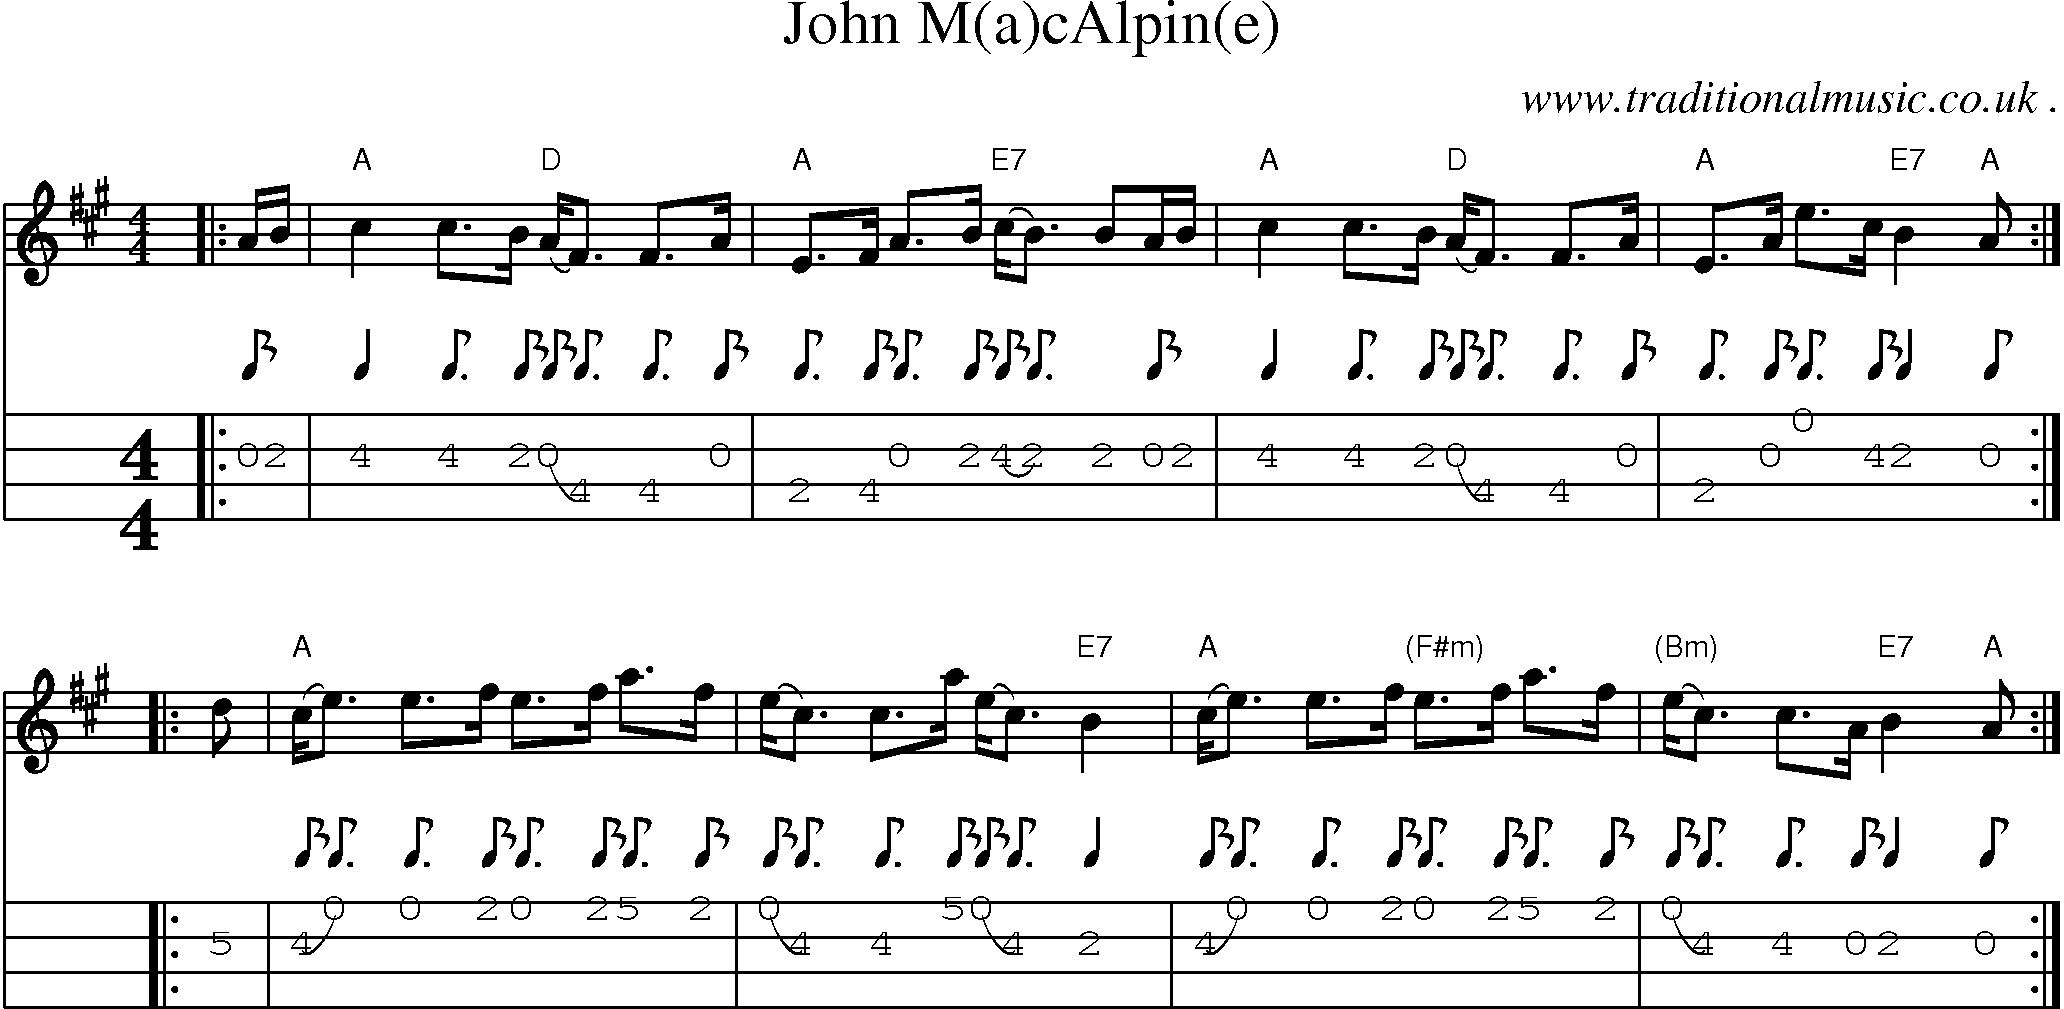 Sheet-music  score, Chords and Mandolin Tabs for John Macalpine